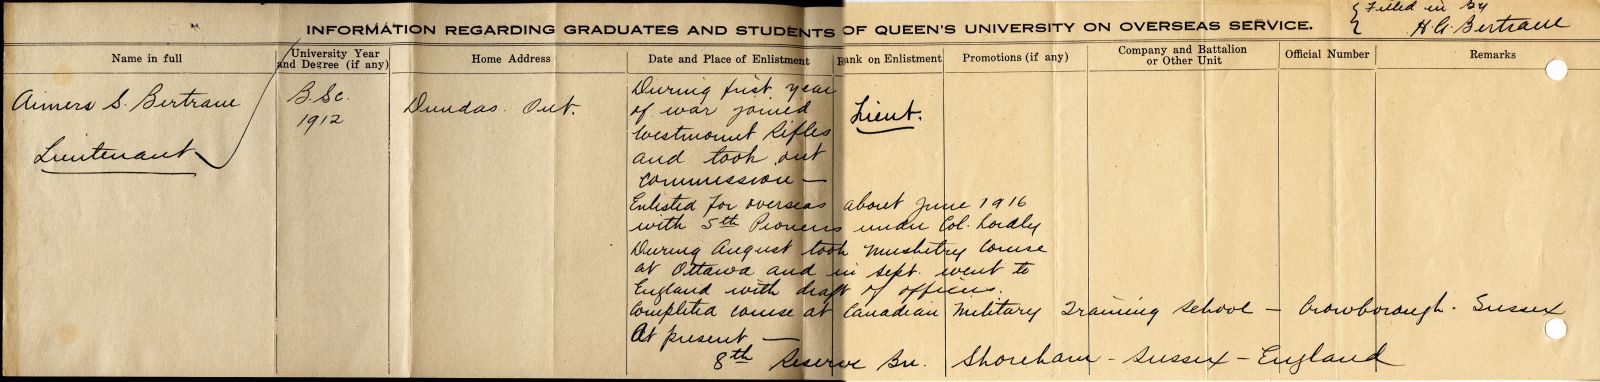 University Overseas Service Record of Bertram